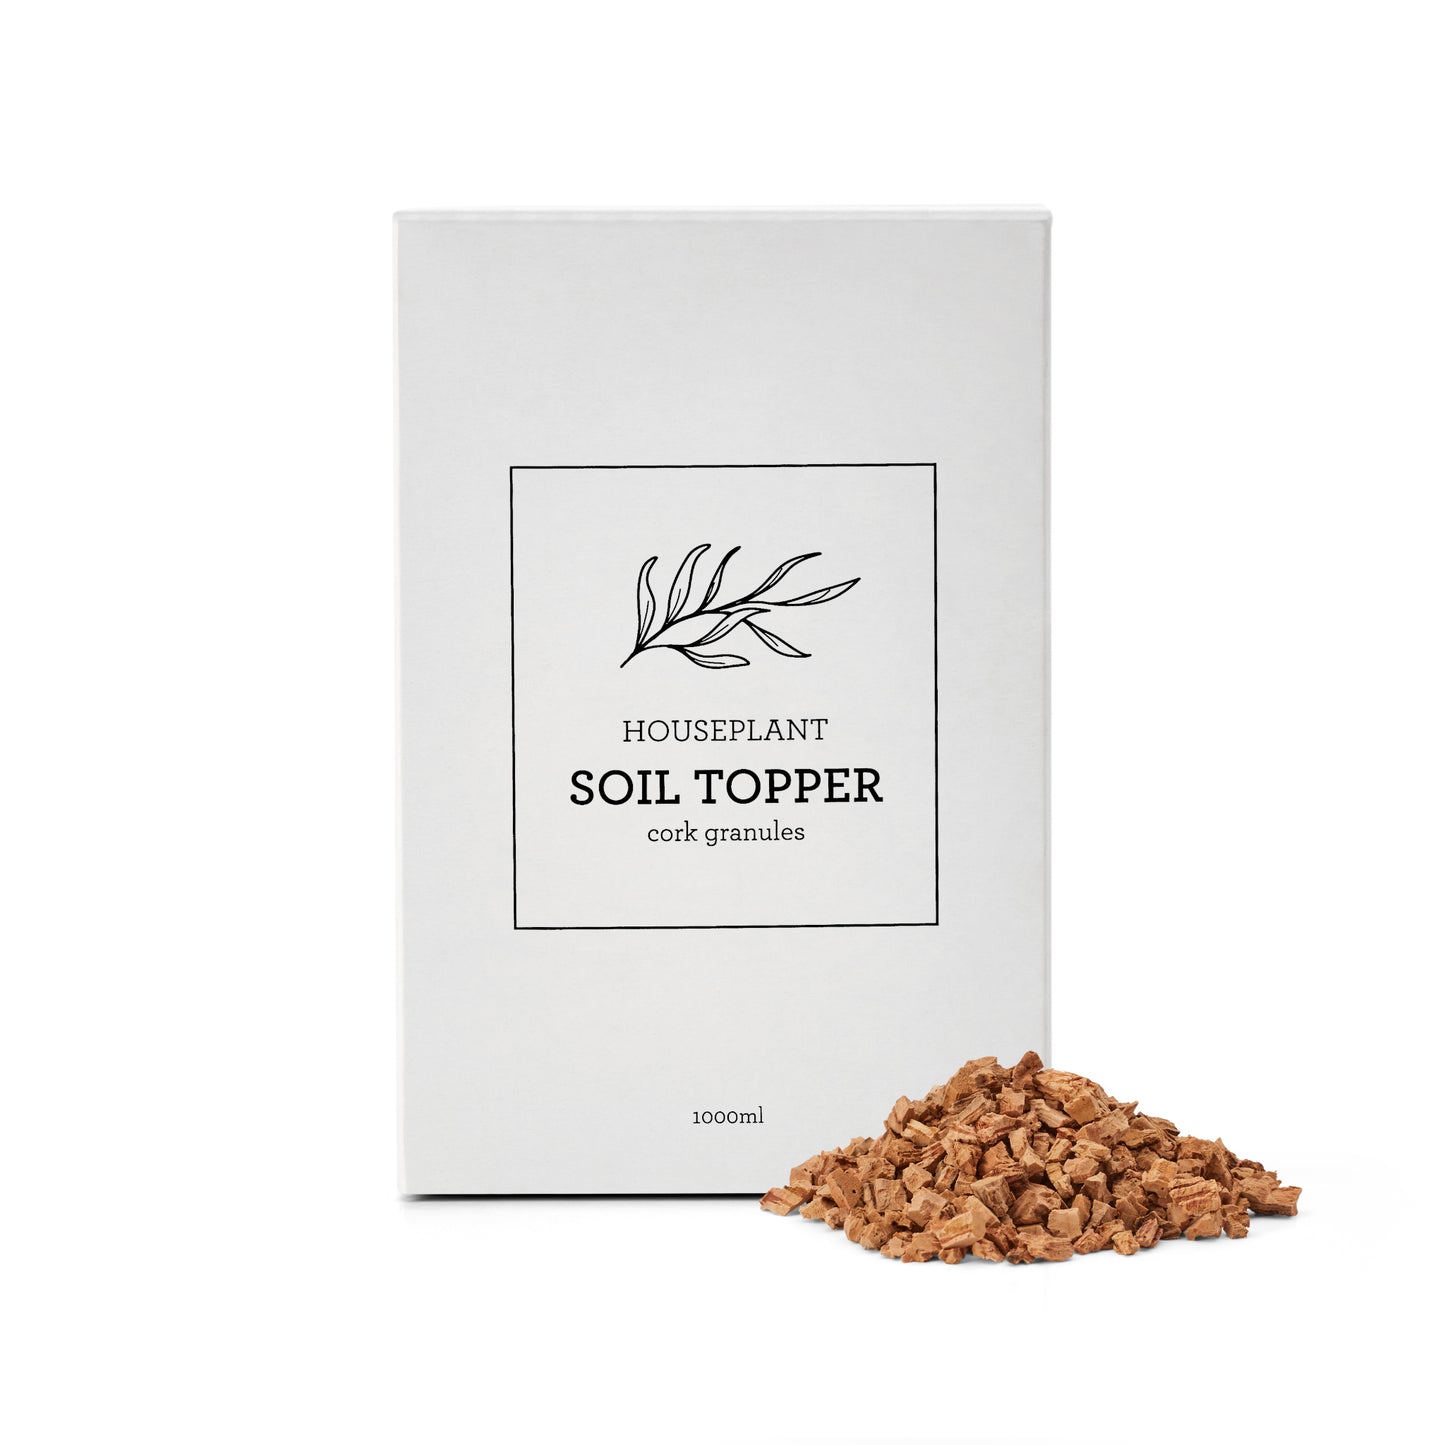 HOUSE PLANT SOIL TOPPER | Cork granules (Case of 6 units)